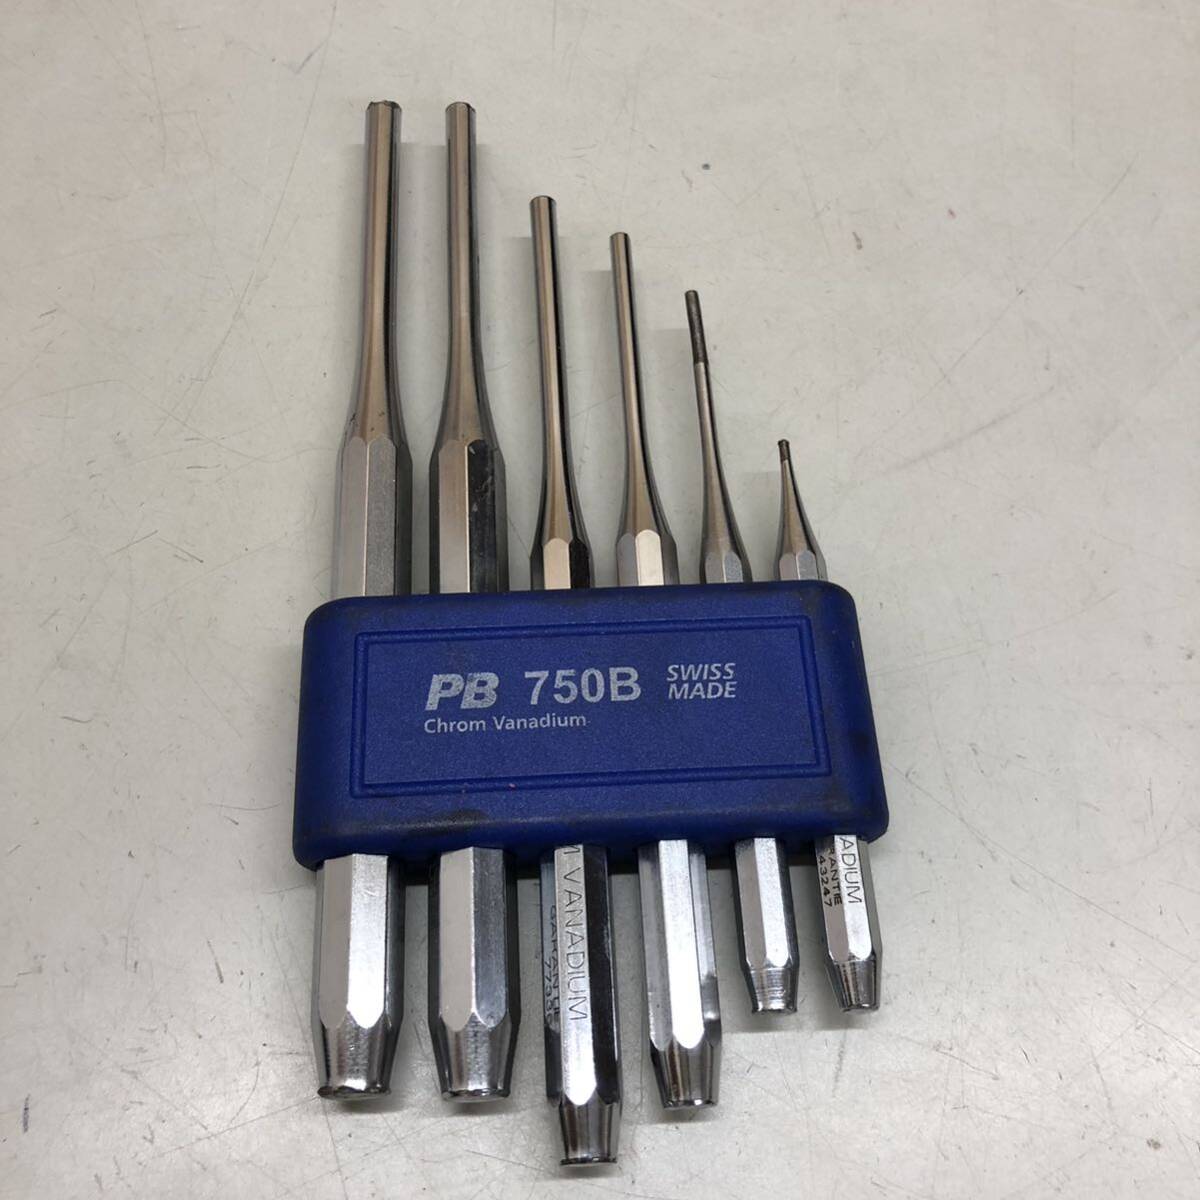 ⑥ PB 750B flat line pin punch set present condition goods tool DIY